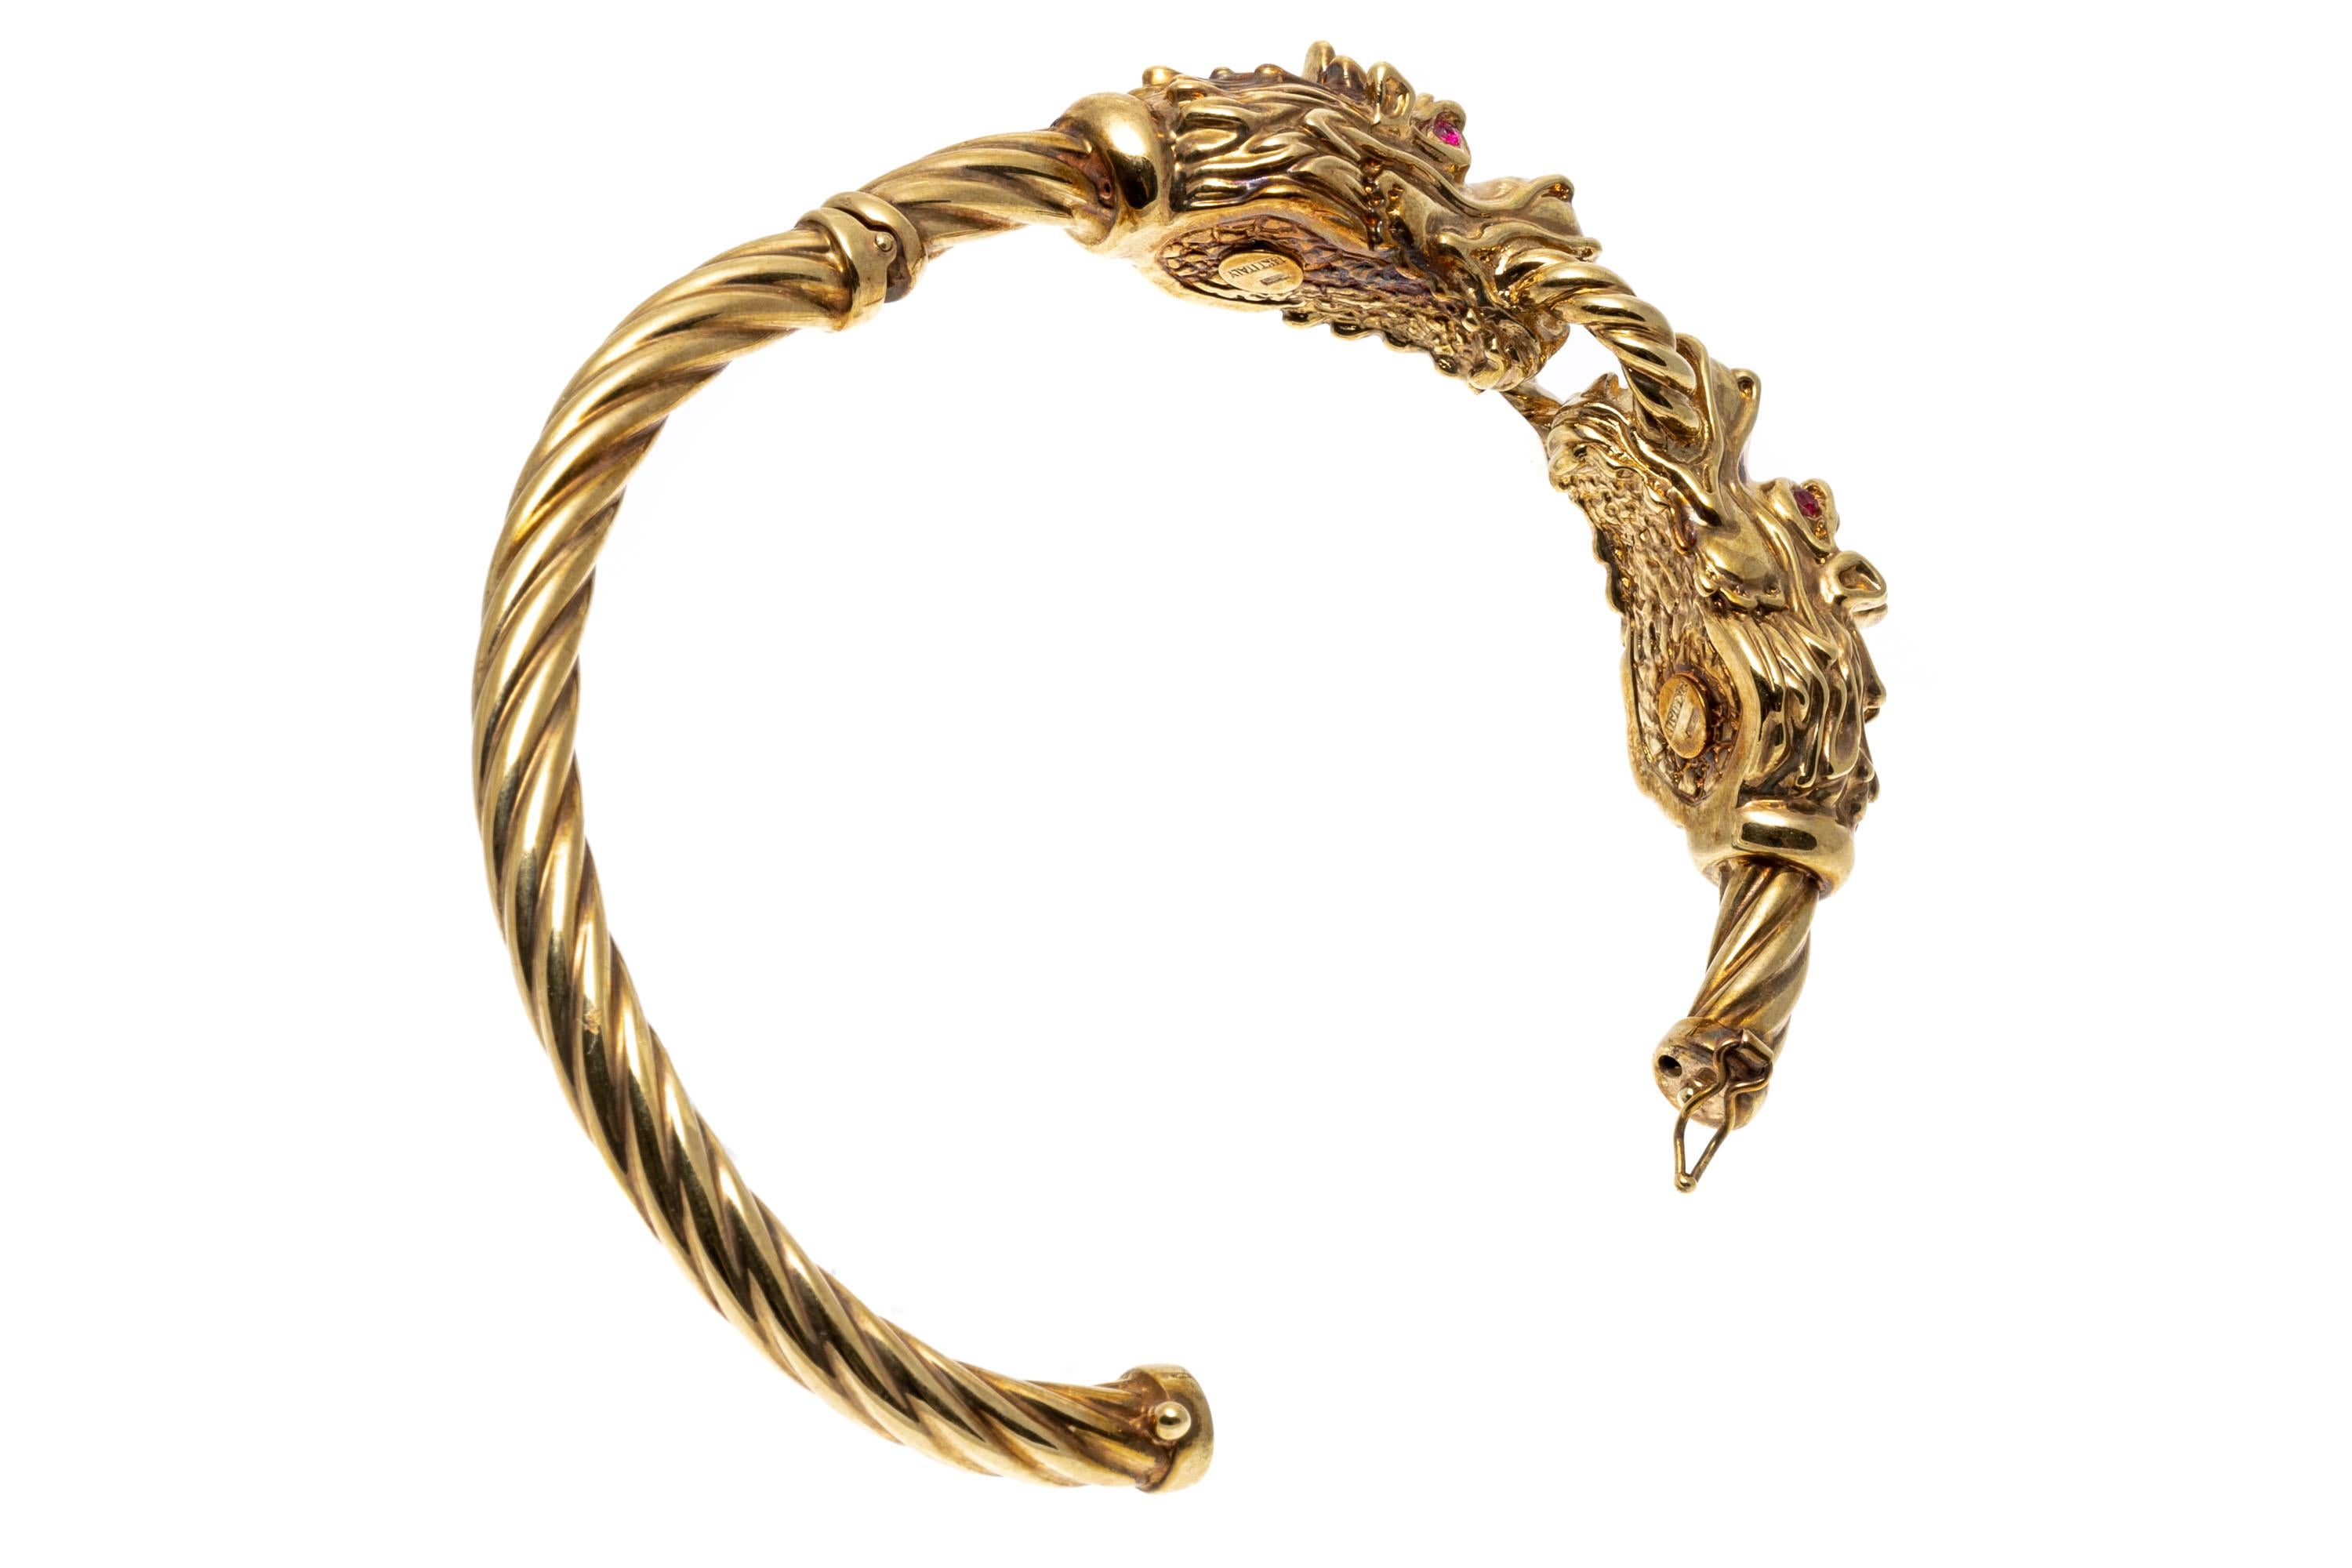 14k Yellow Gold Facing Dragons Hinged Twisted Bangle Bracelet 4